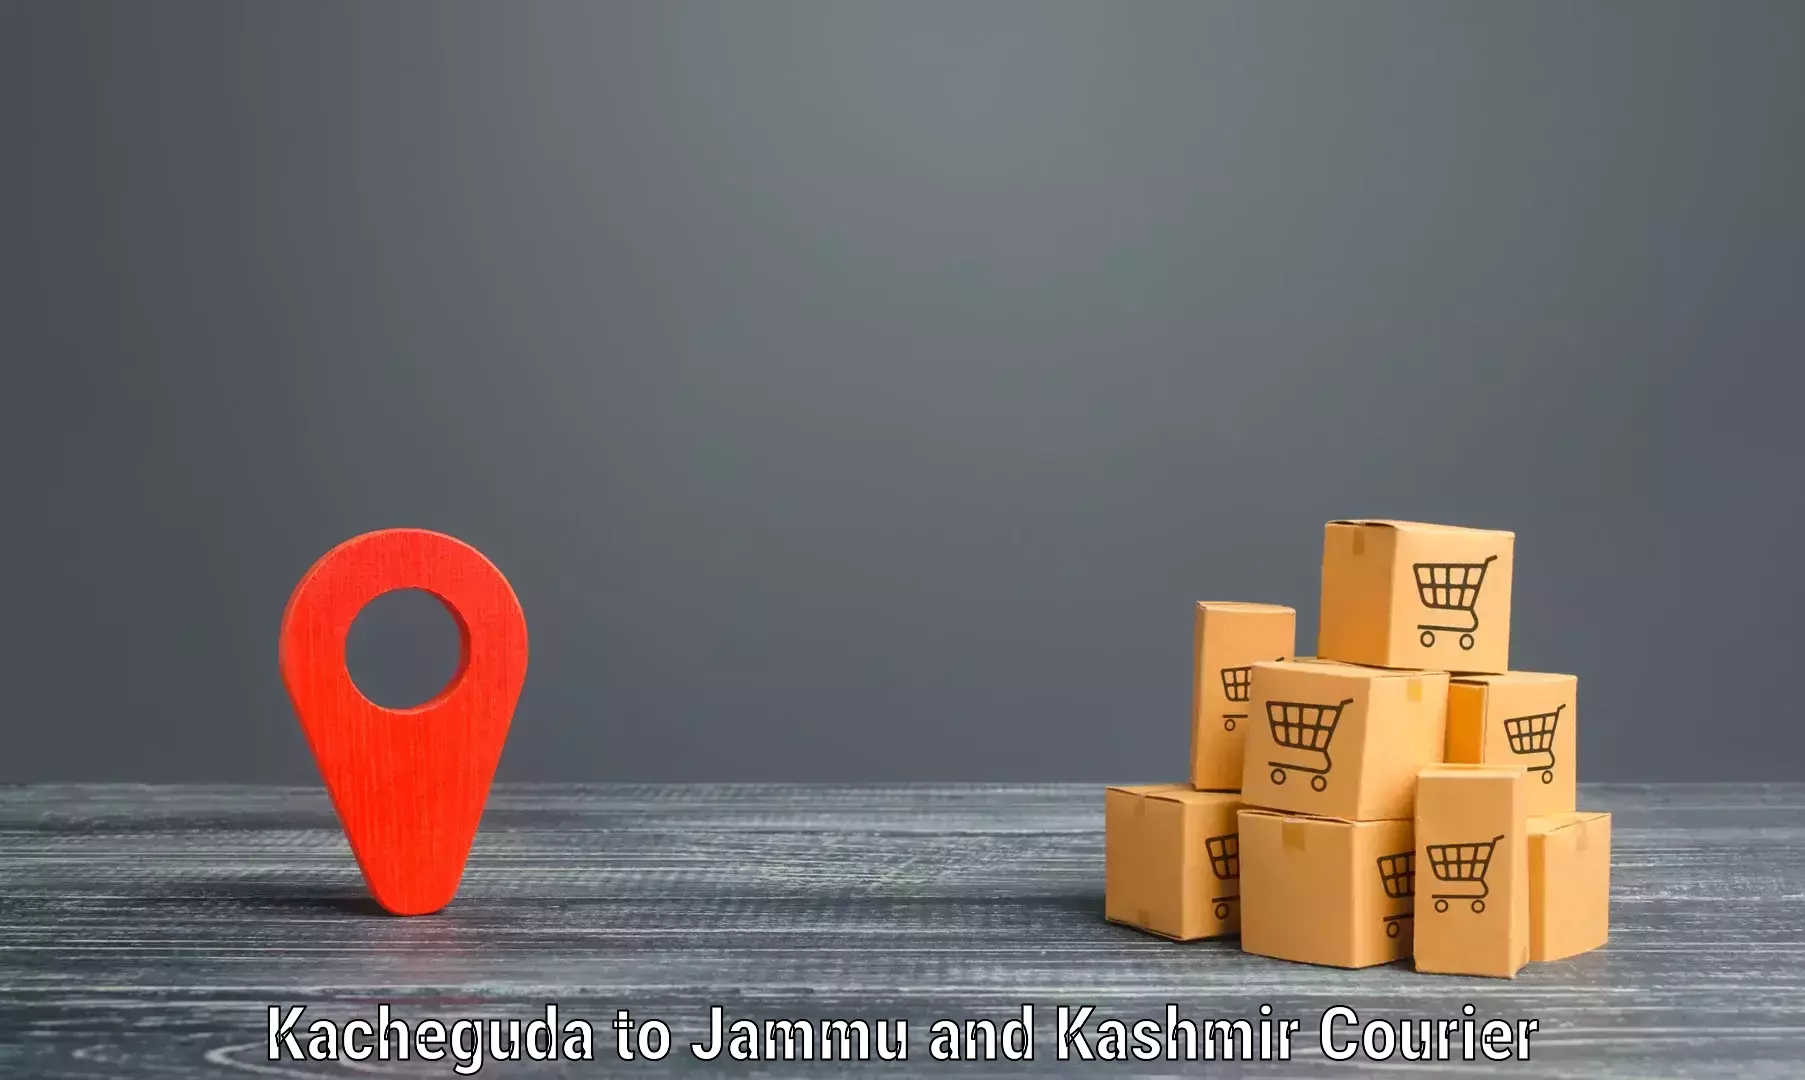 Next-day delivery options Kacheguda to Srinagar Kashmir